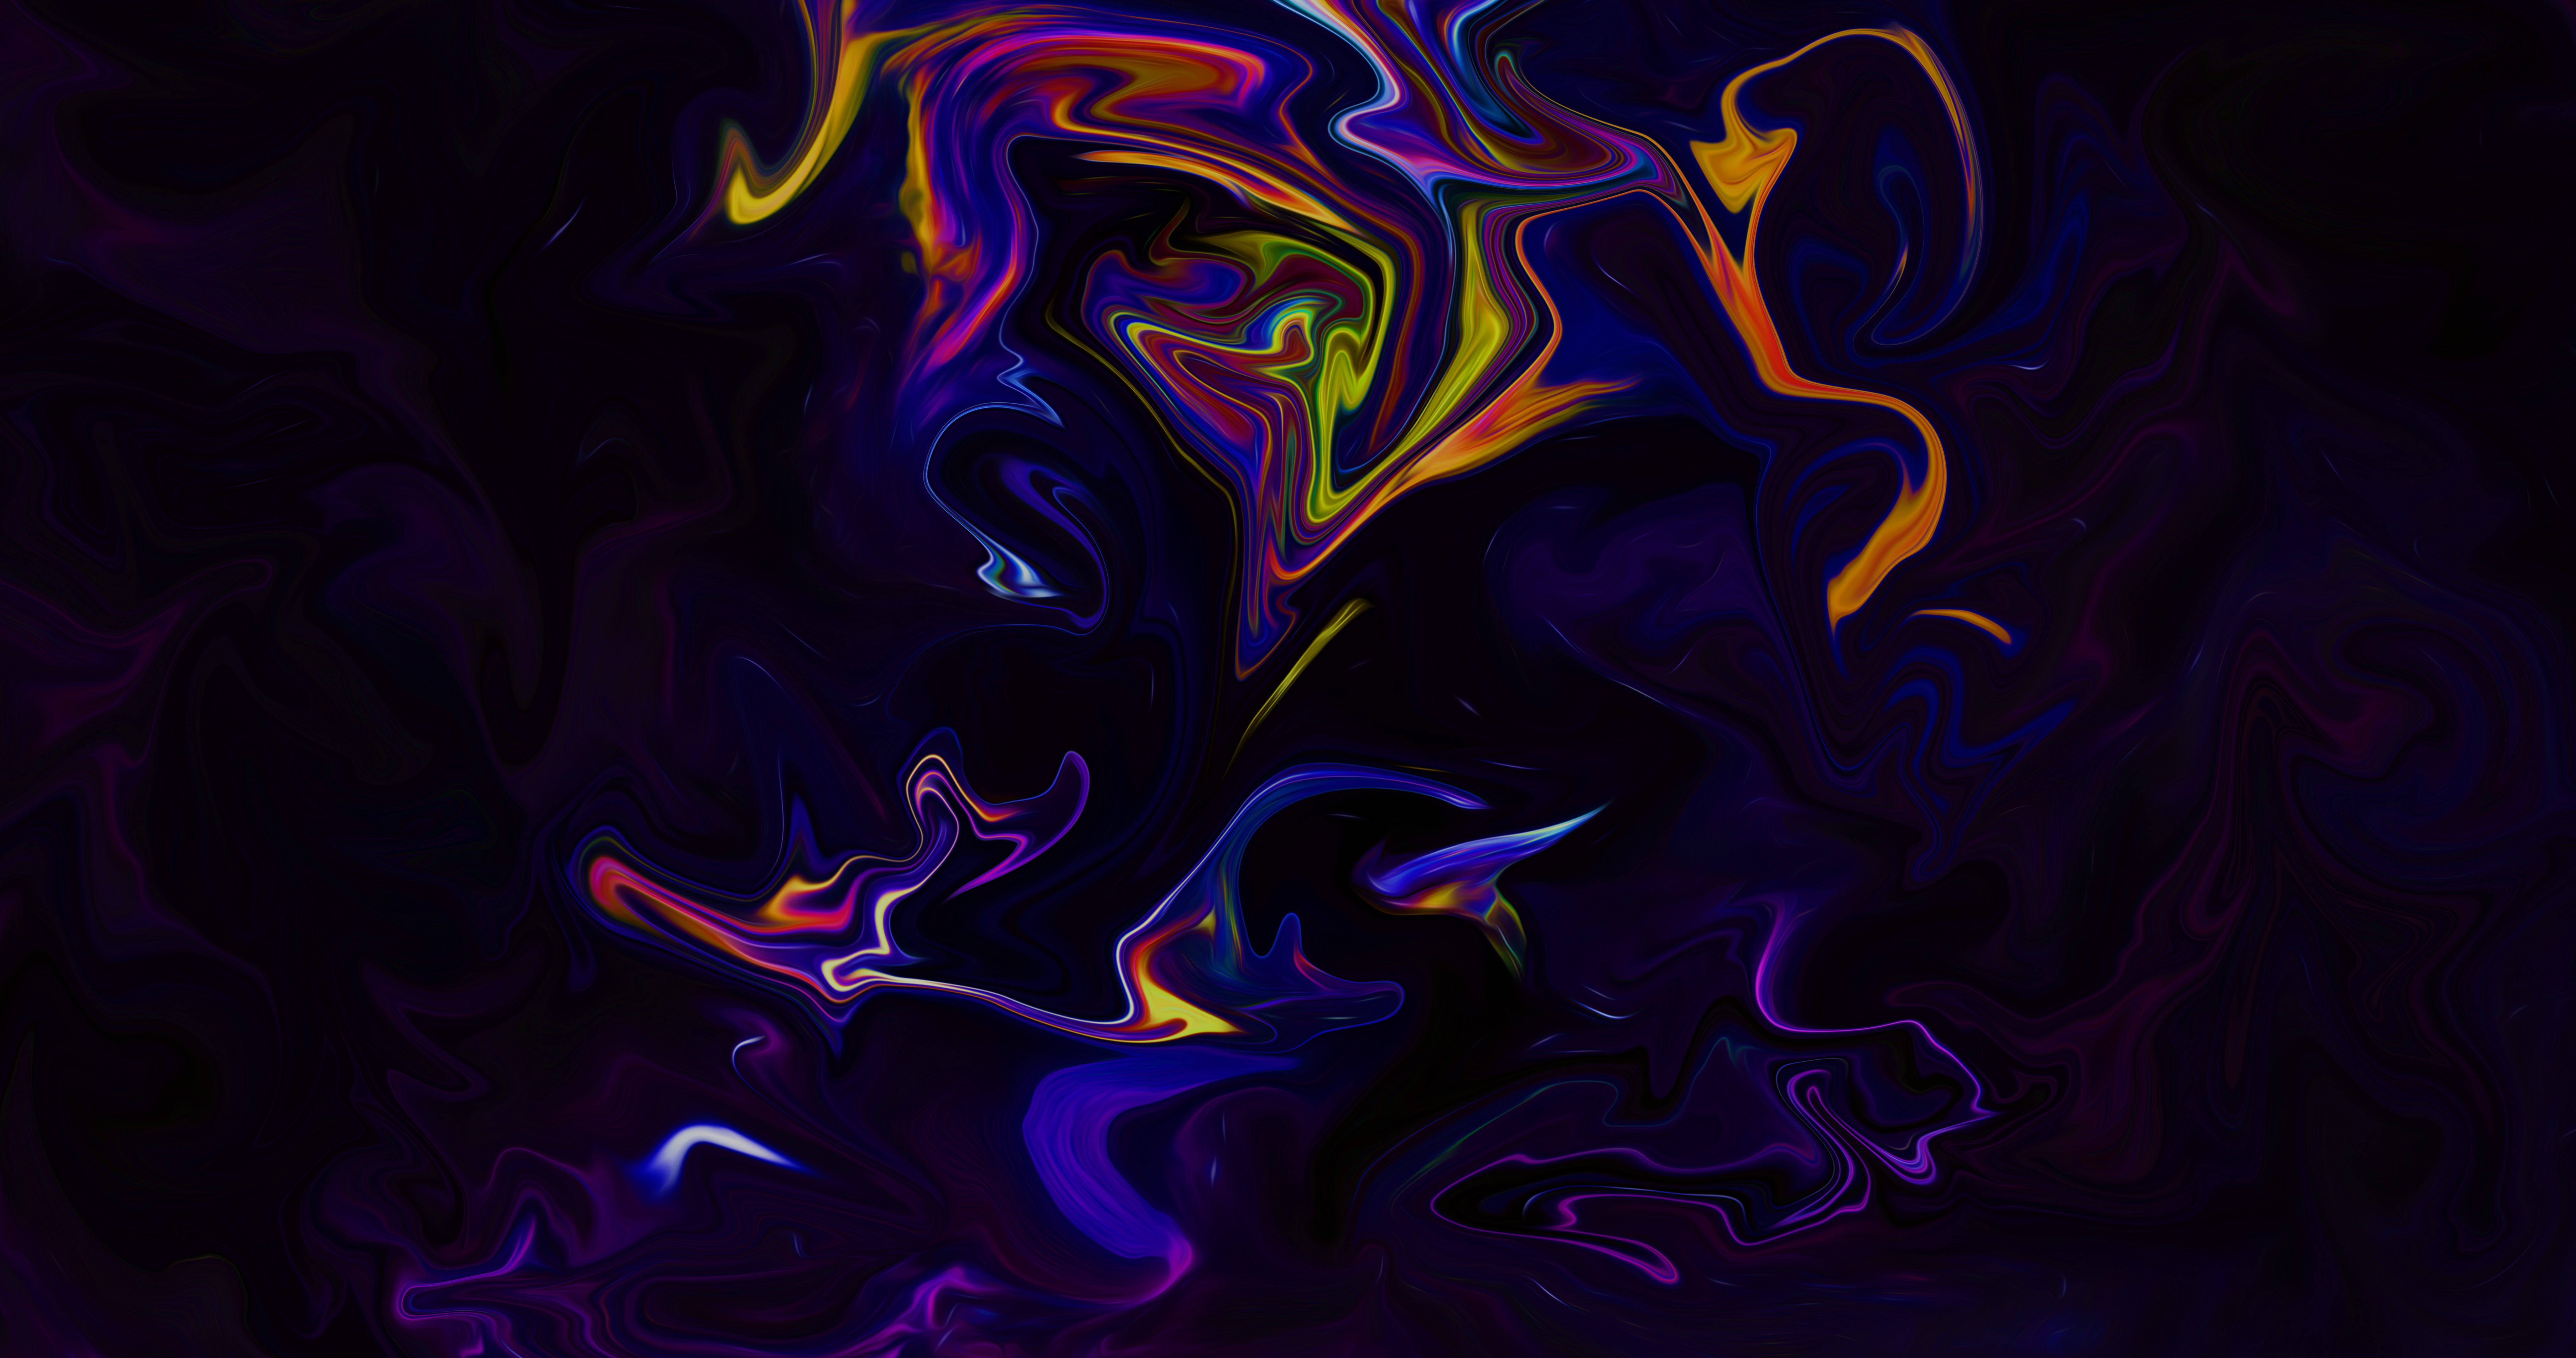 General 8192x4320 abstract shapes colorful fluid liquid artwork digital art paint brushes neon purple purple background dark 8 K